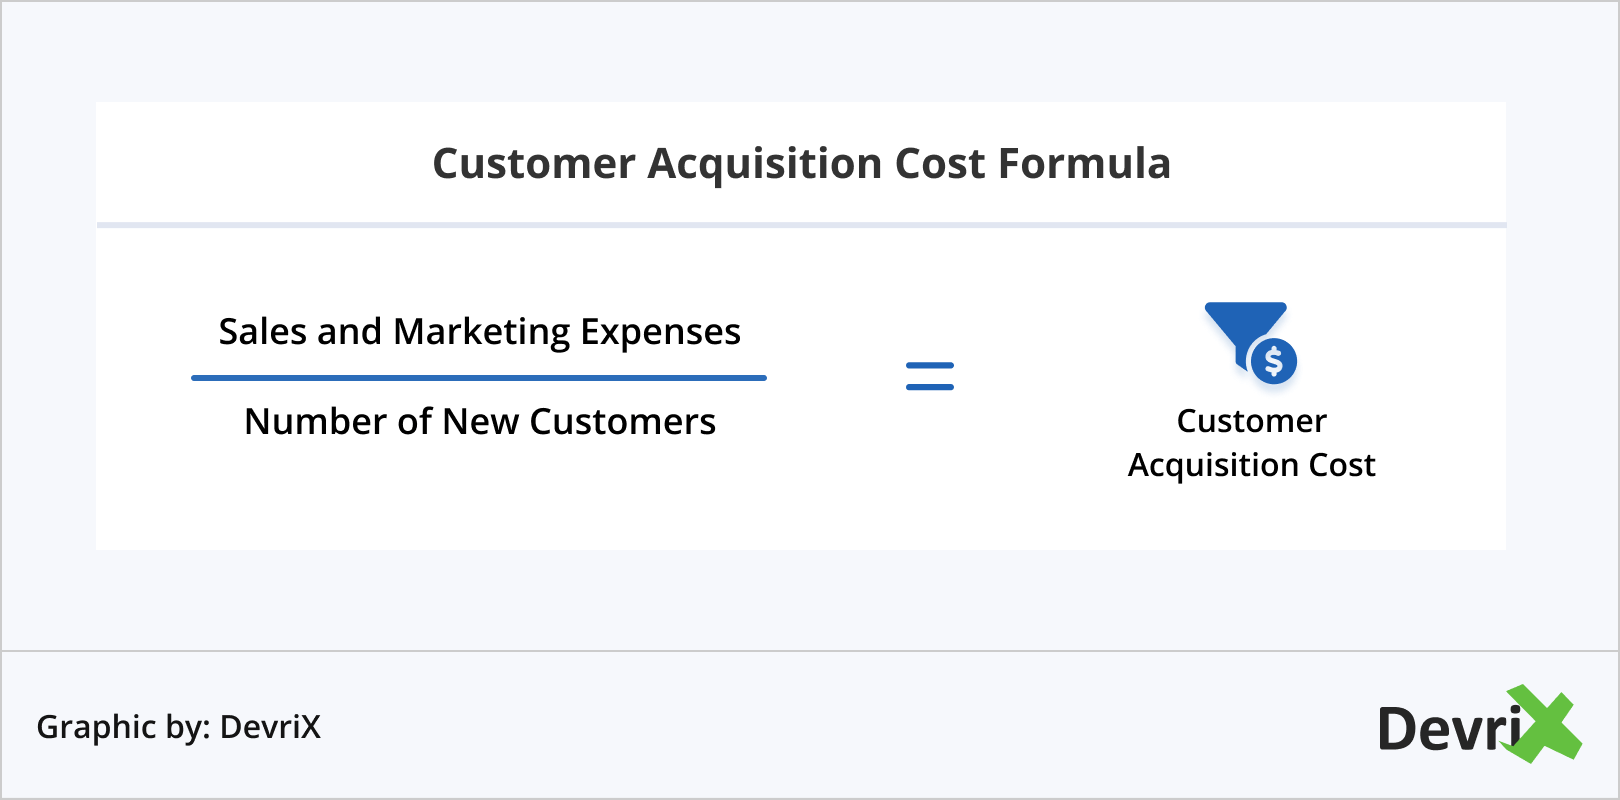 Customer Acquisition Cost Formula